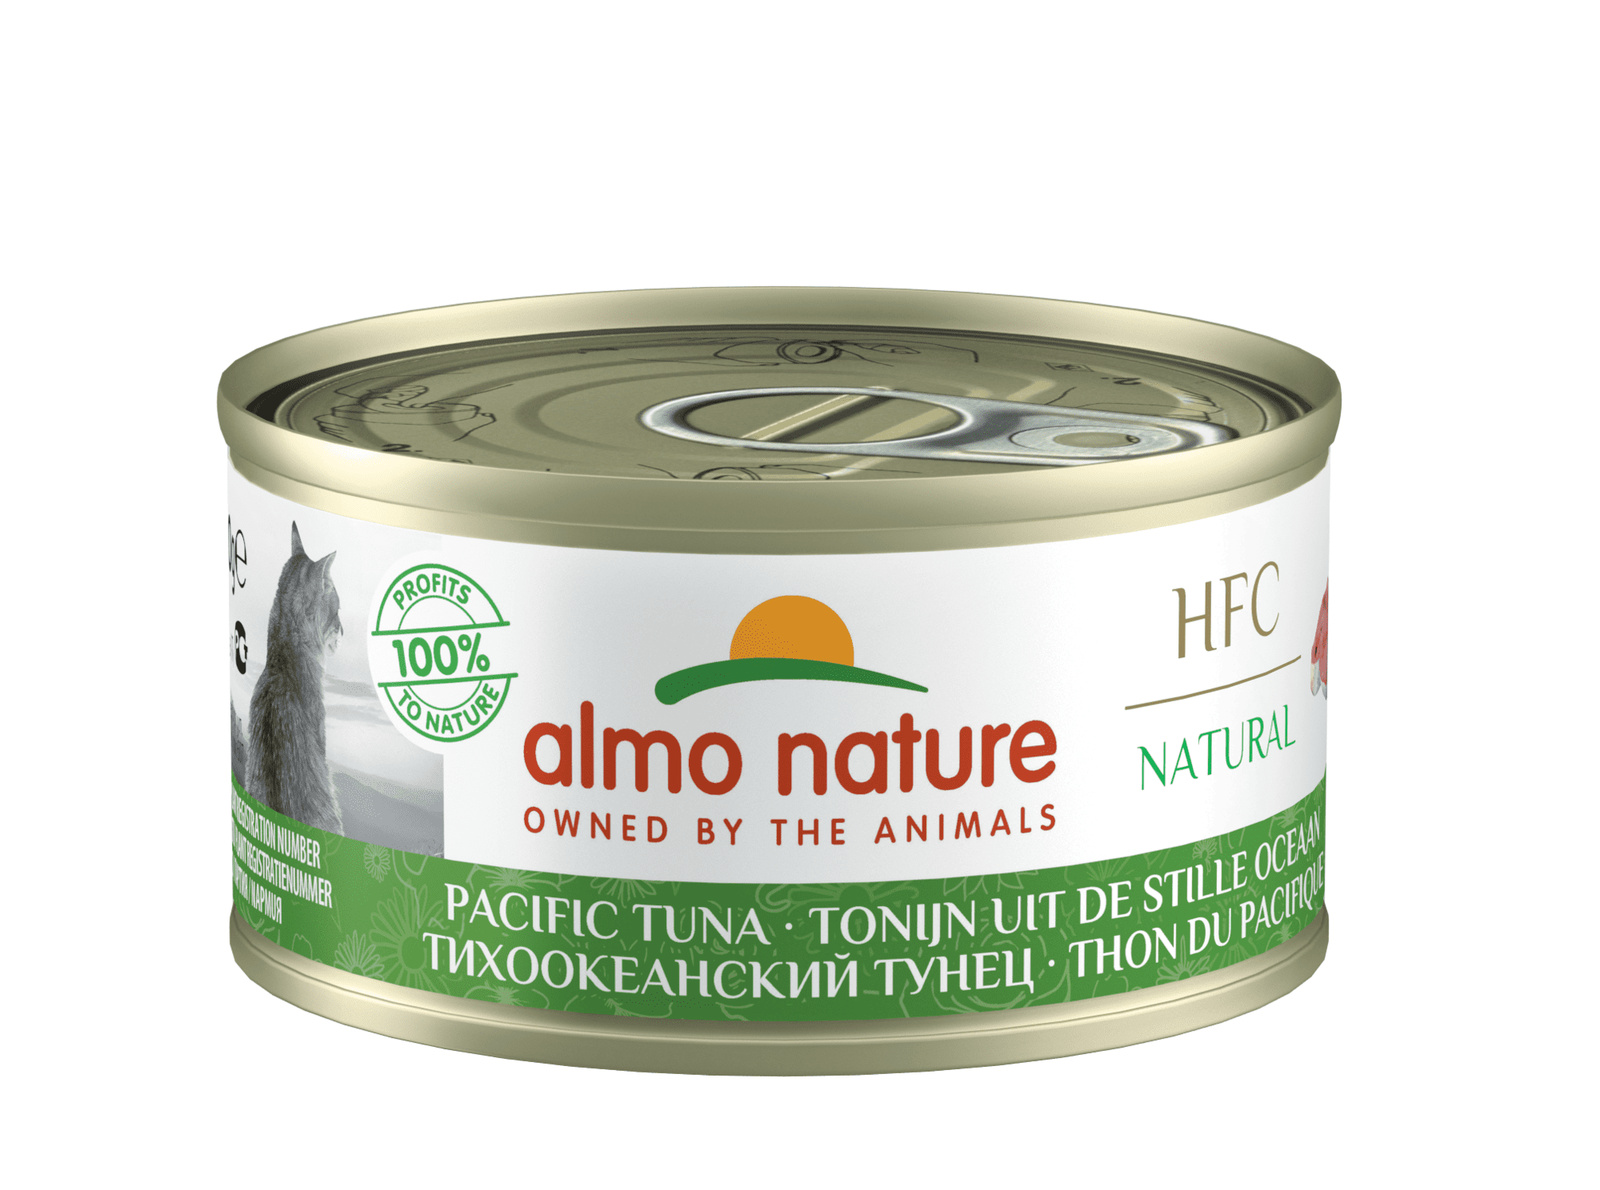 Almo Nature консервы Almo Nature консервы для кошек, с тихоокеанским тунцом (70 г) almo nature консервы almo nature консервы с морепродуктами в желе для кошек 70 г